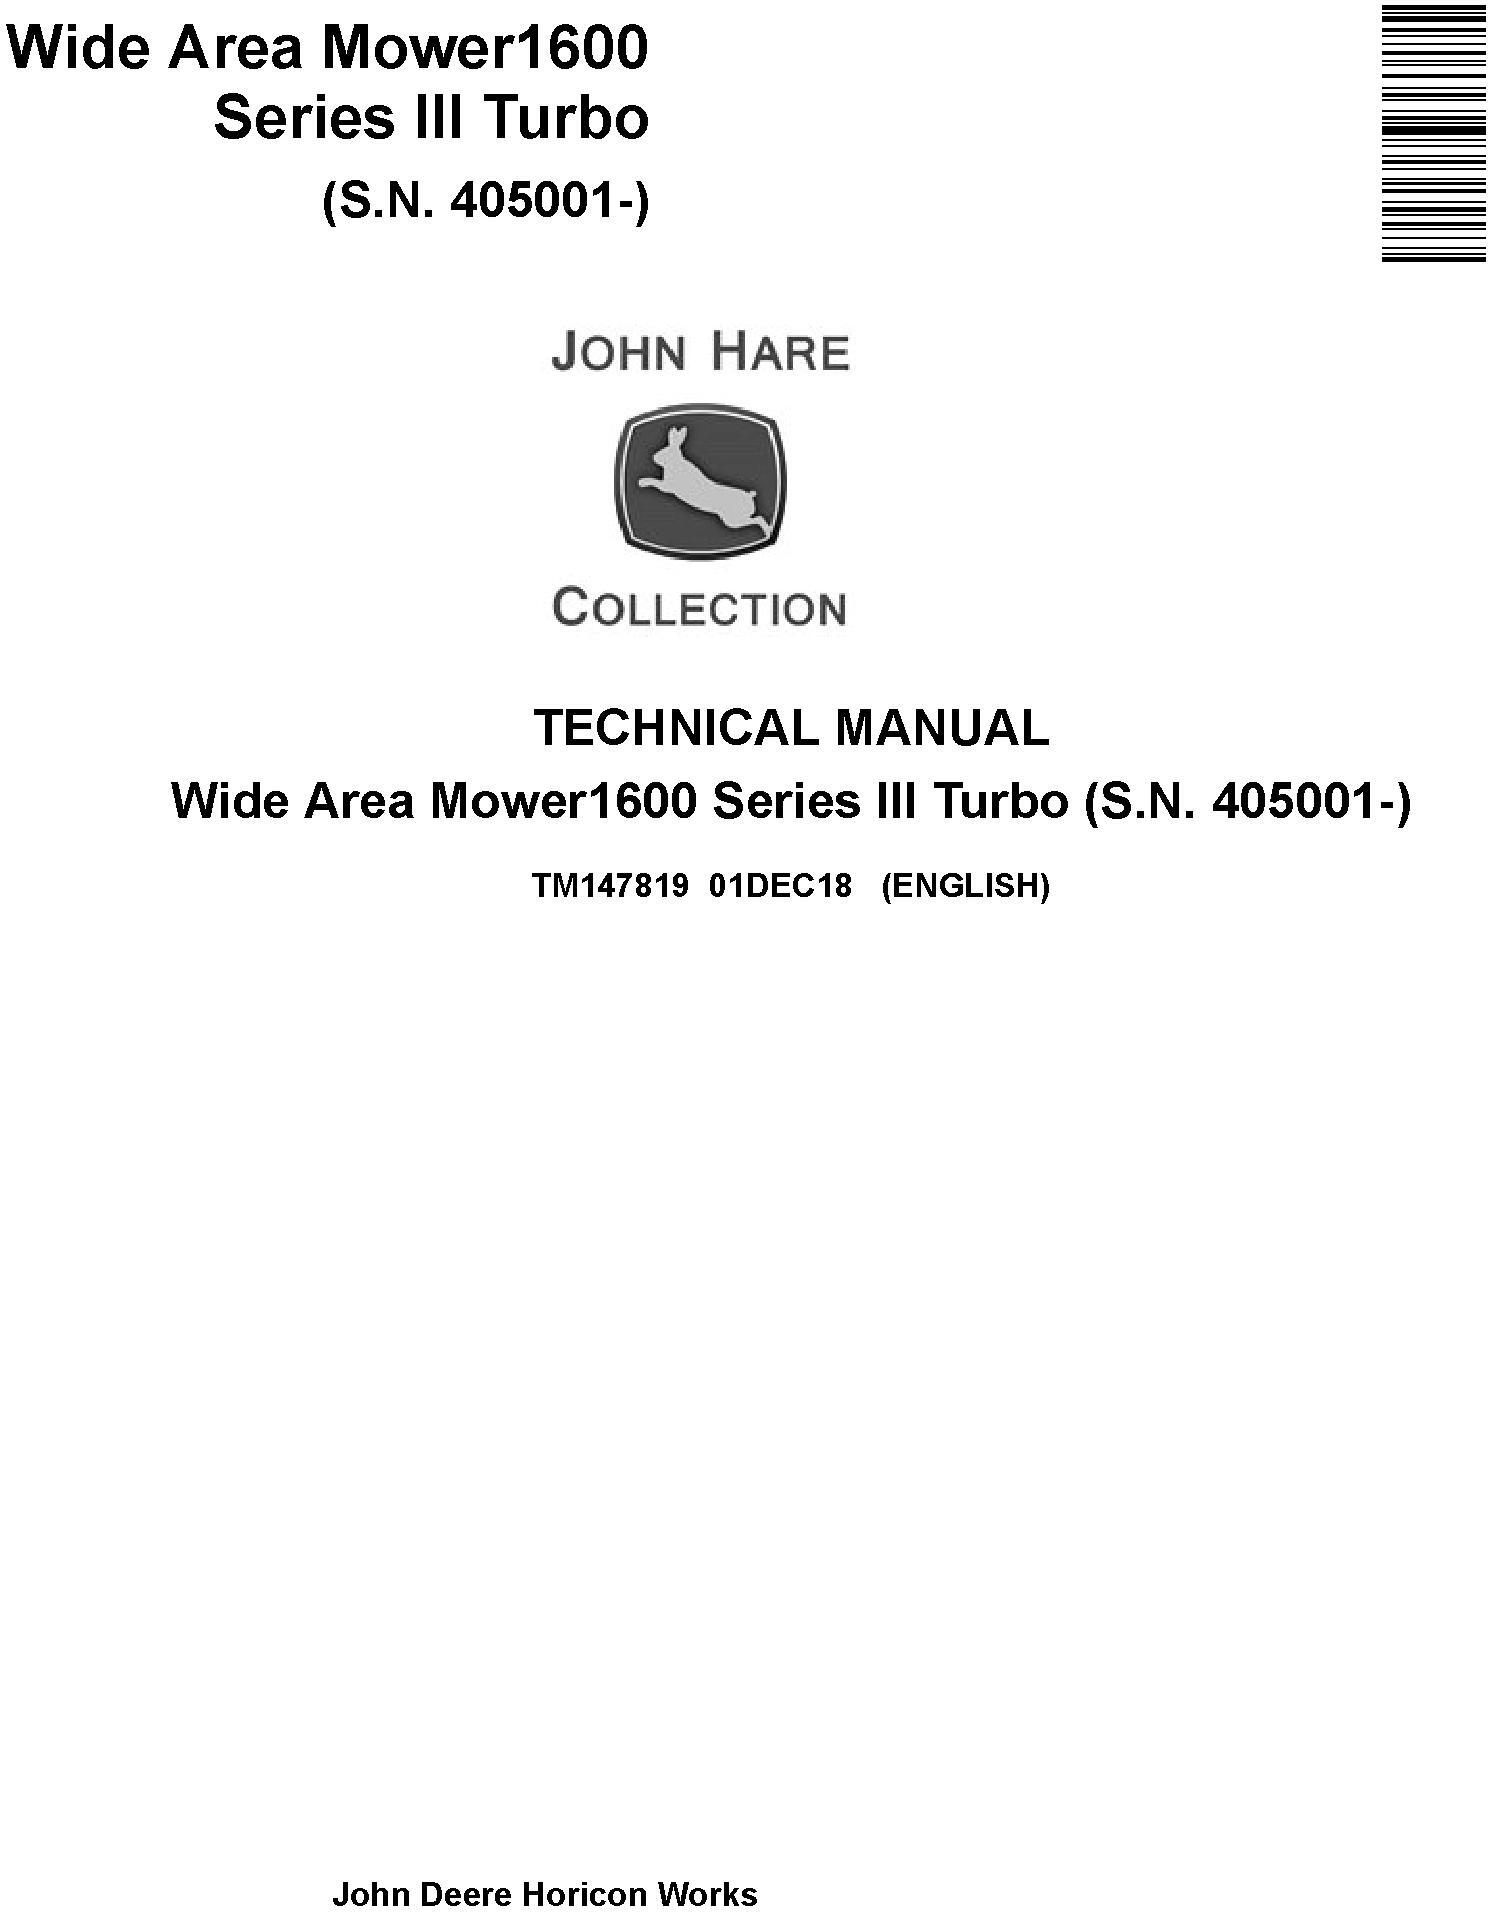 John Deere 1600 Series III Turbo Wide Area Mower Technical Manual TM147819